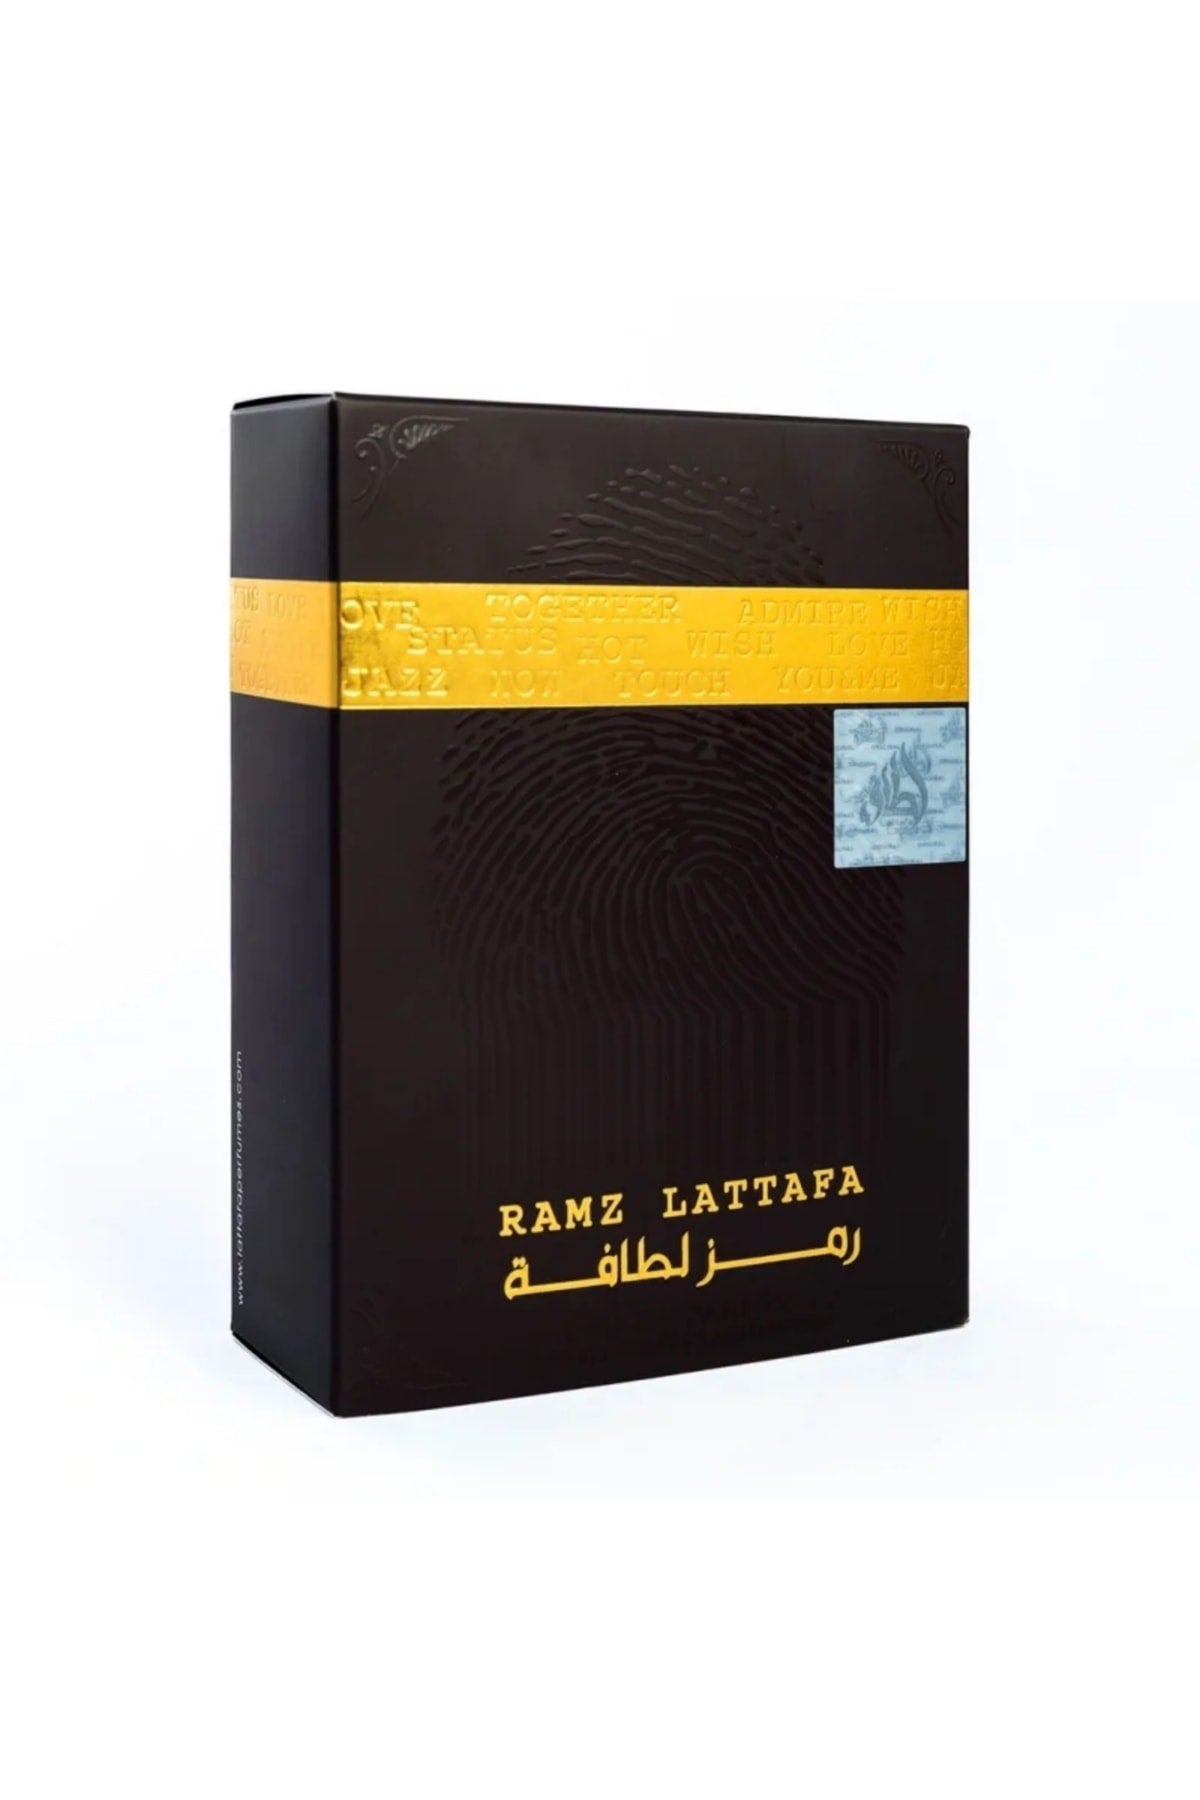 Lattafa Ramz Gold Edp 100ml Boxed (Rare Selection)